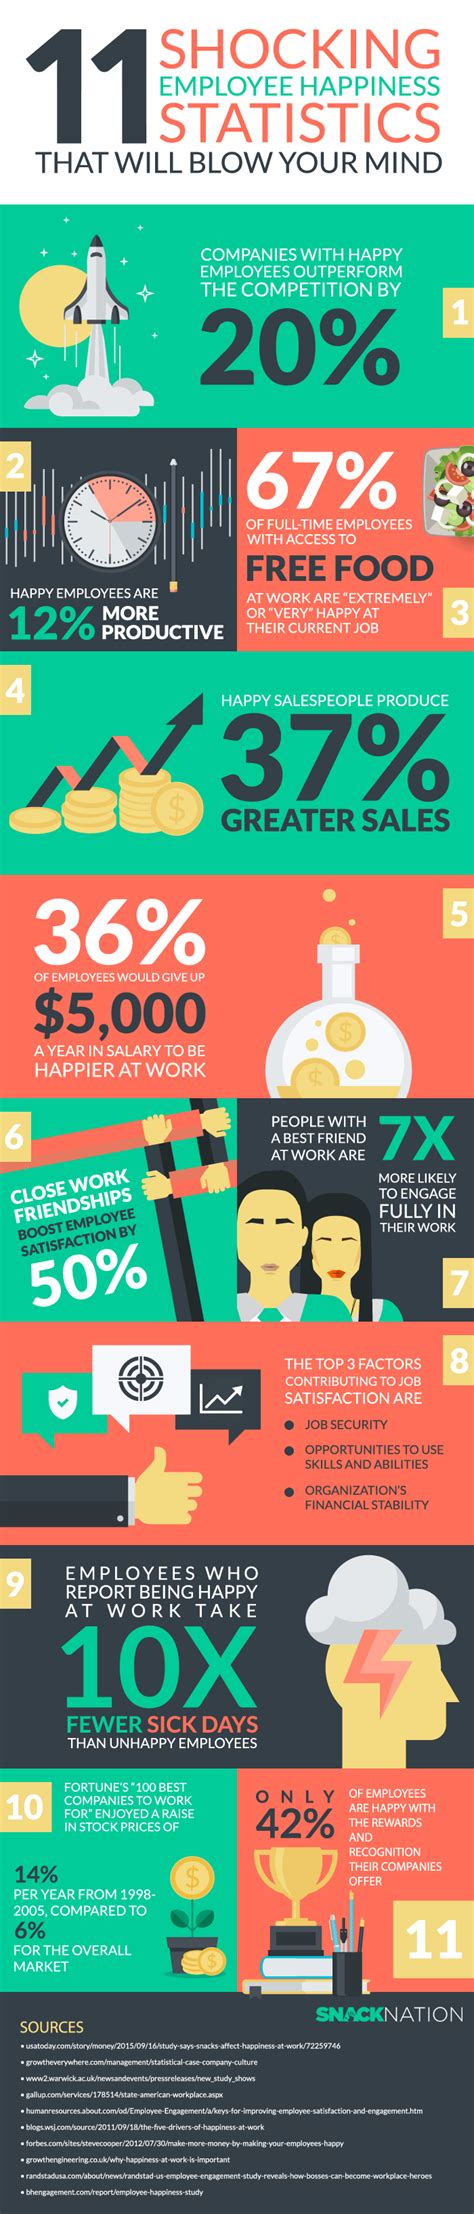 11 Shocking Employee Happiness Statistics Infographic